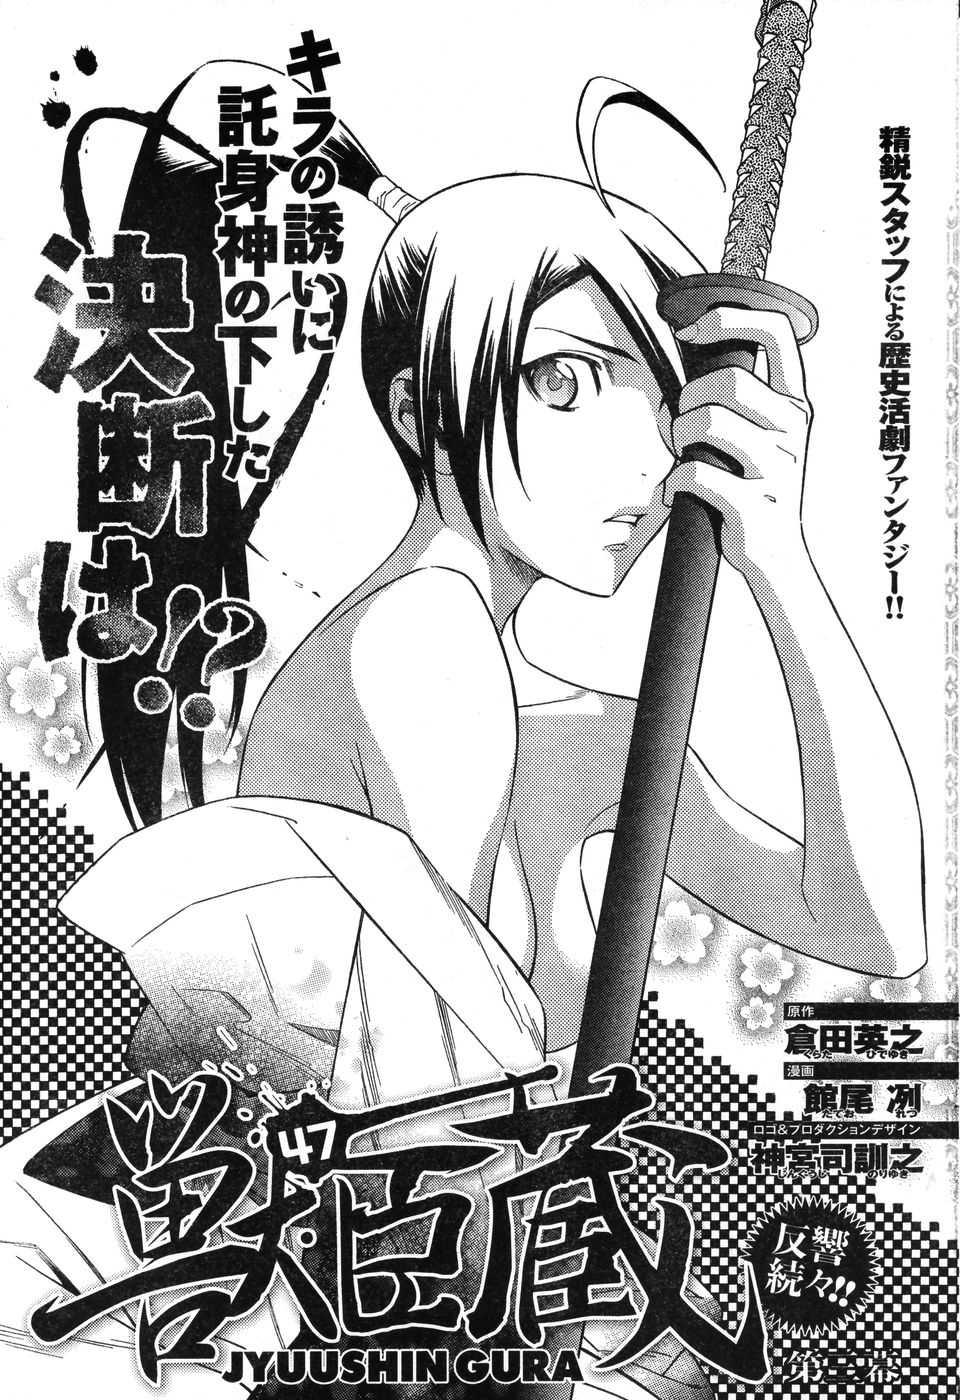 Young Champion Retsu Vol.12 (2008-05-25 Zoukangou) (雑誌) ヤングチャンピオン烈 Vol.12 (2008年05月25日増刊号)